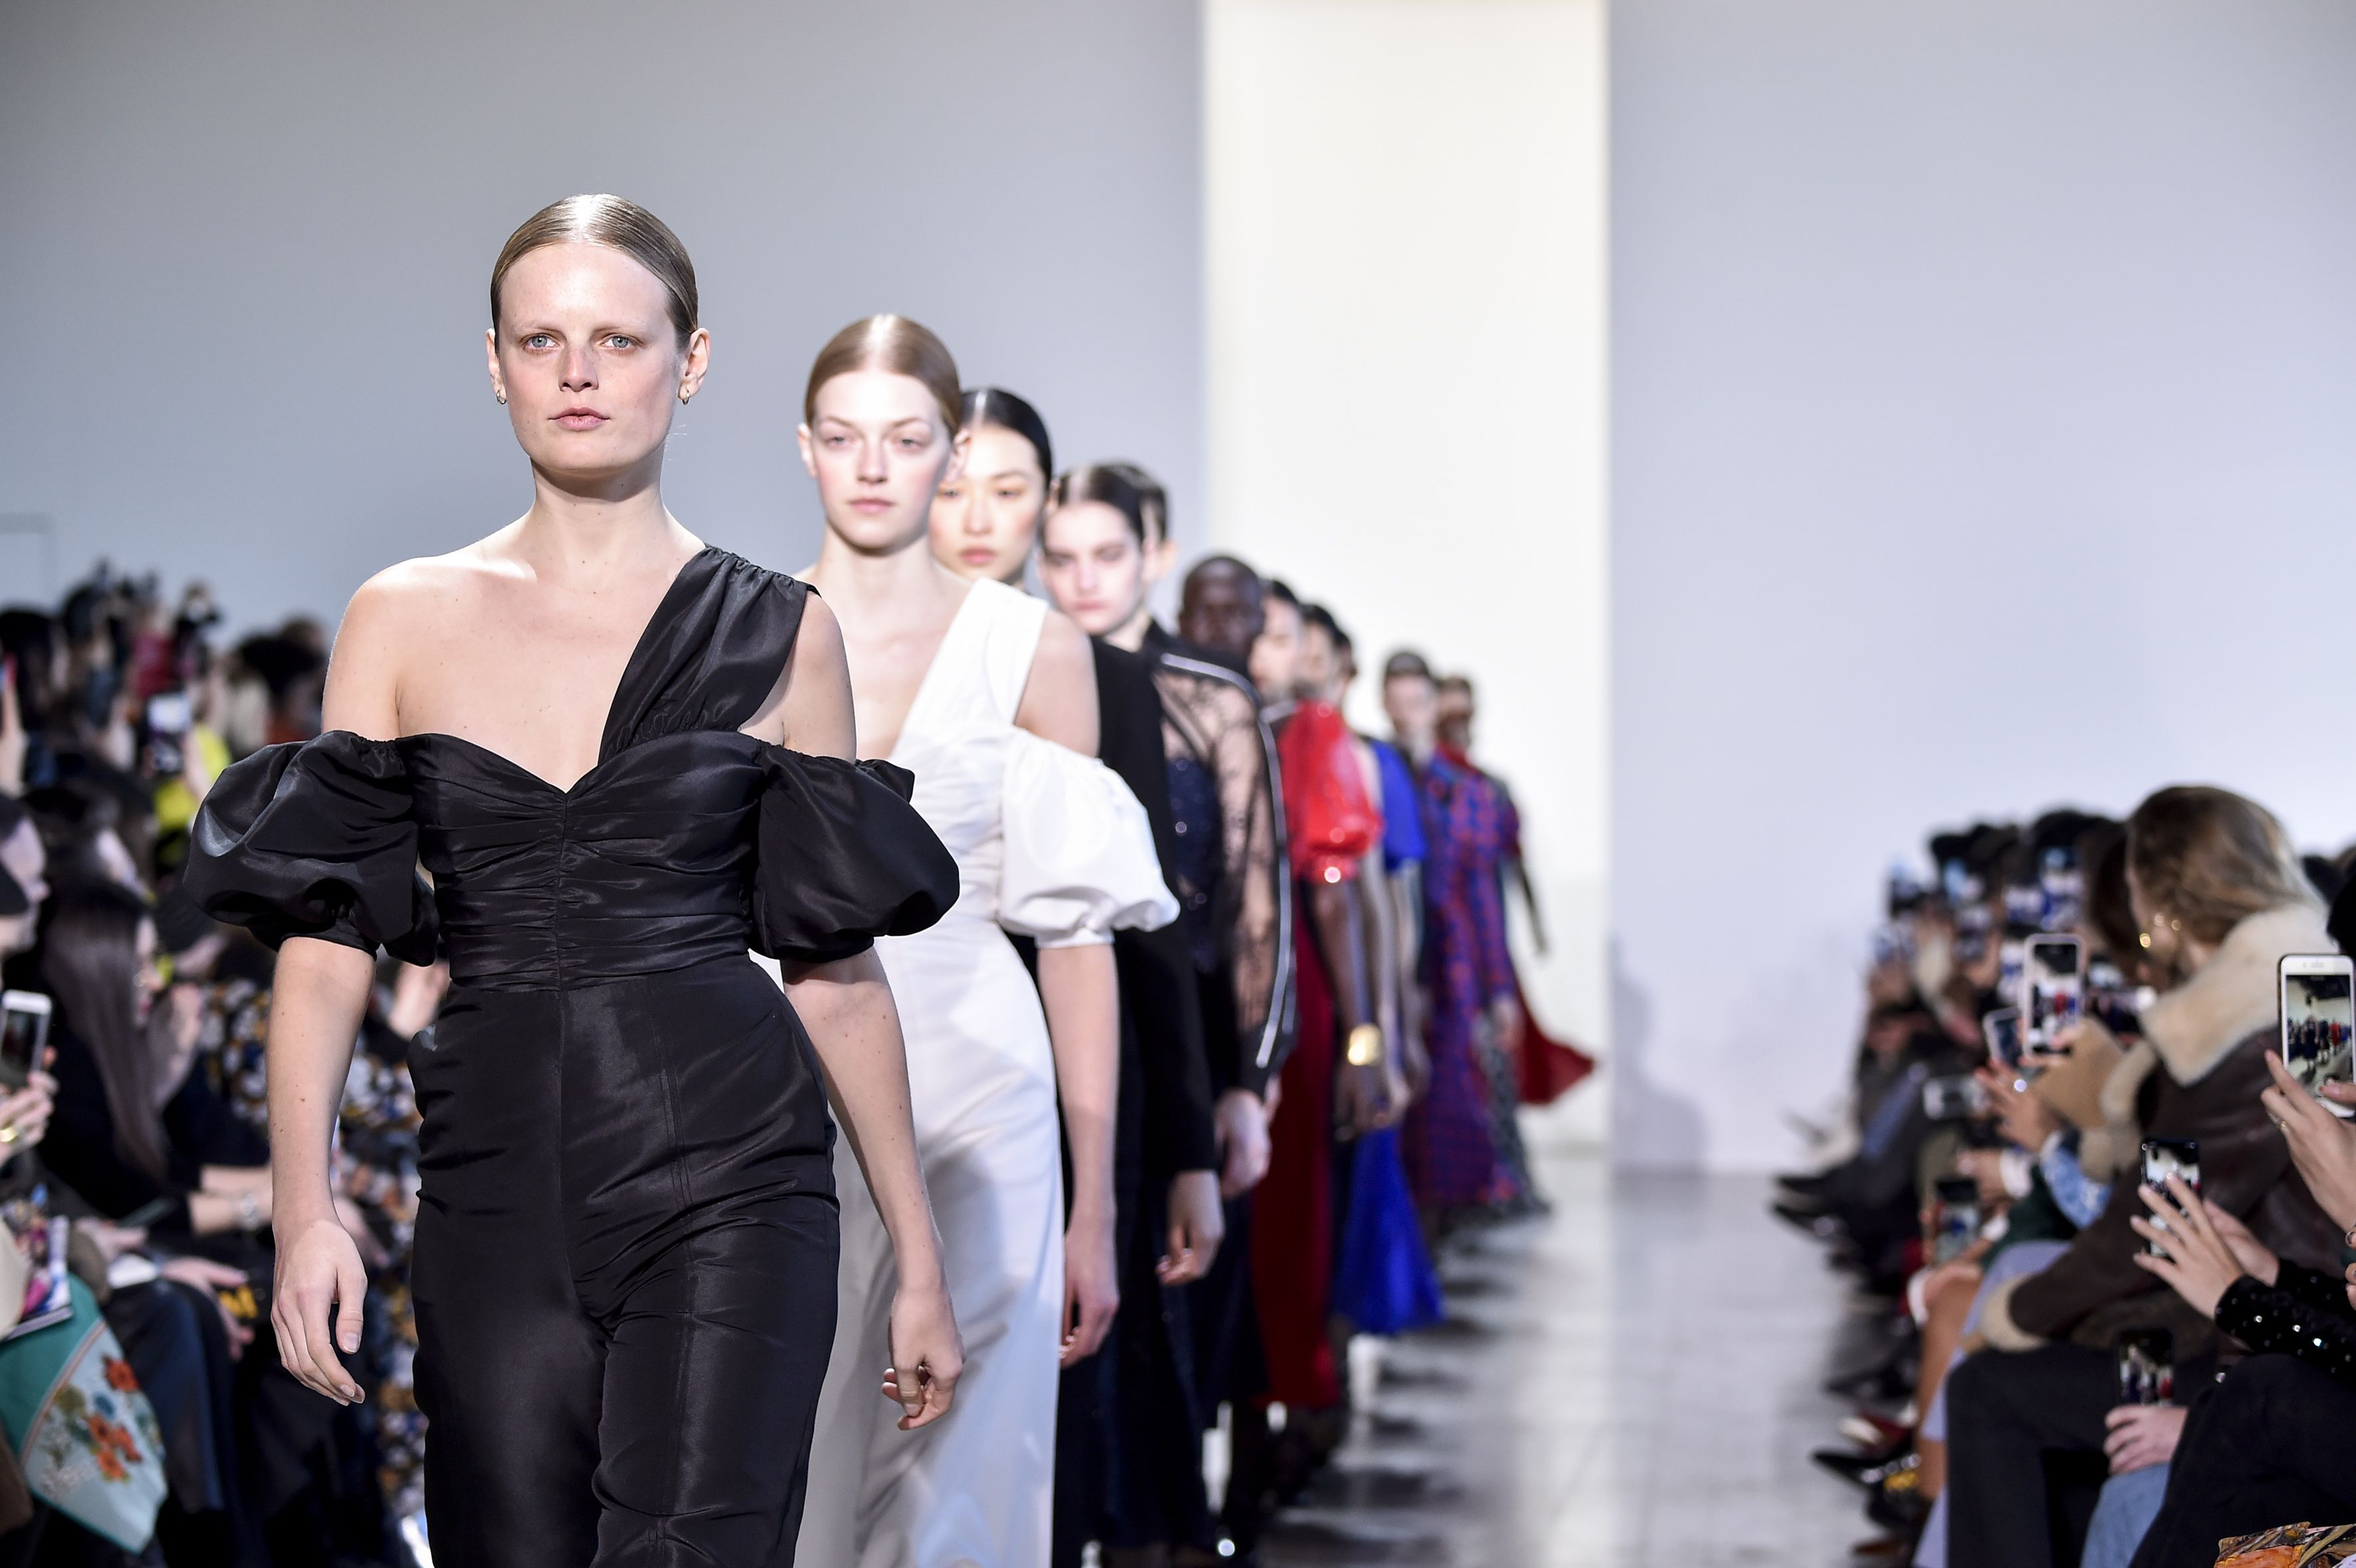 London Fashion Week announces its first public shows